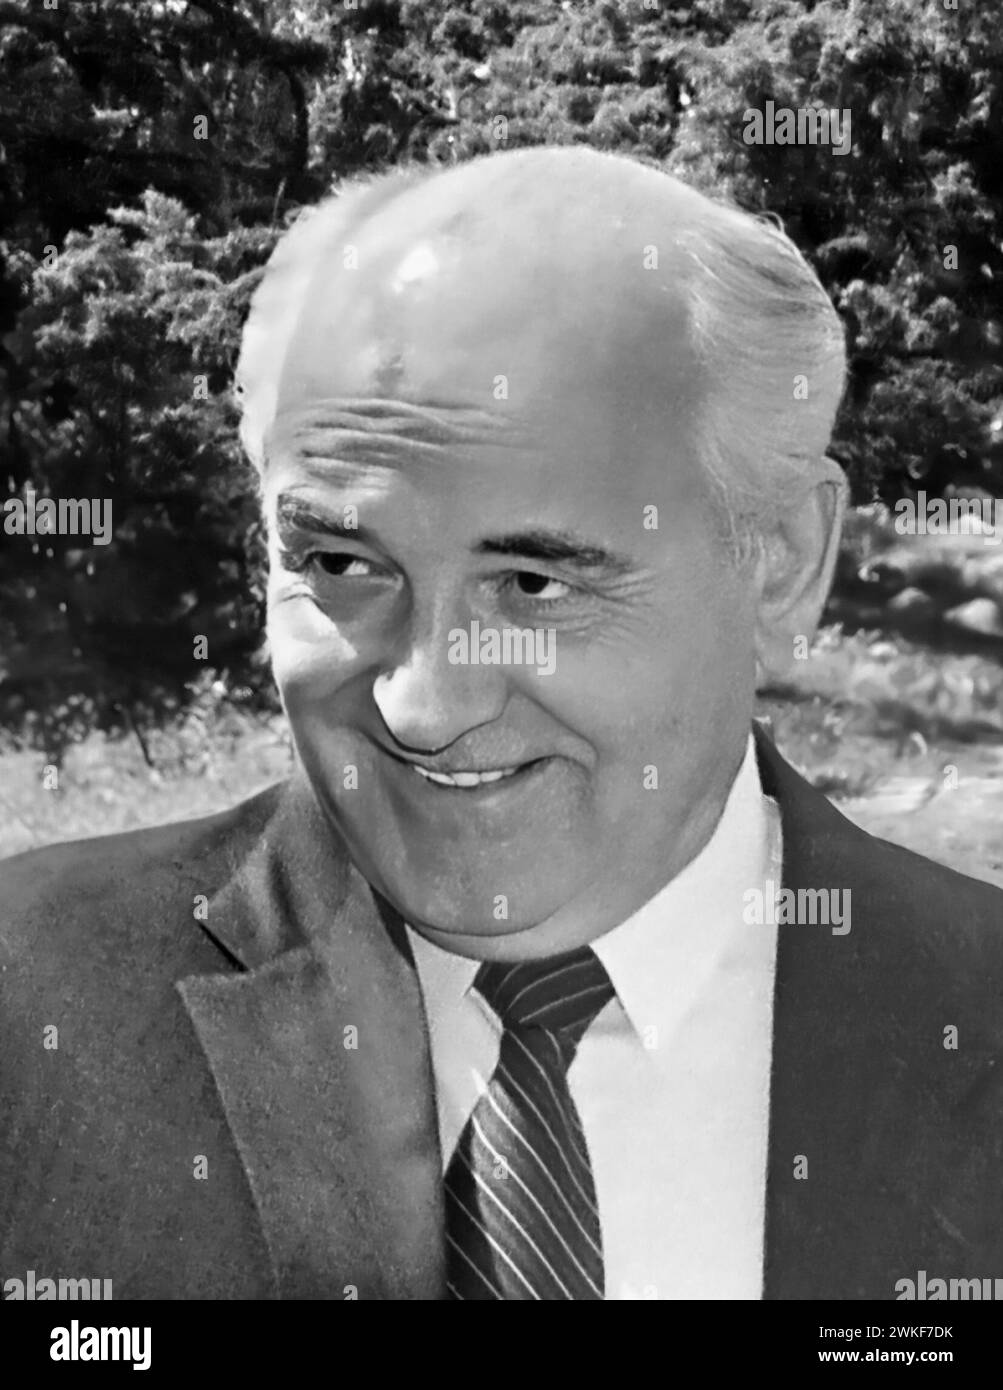 Mikhail Gorbachev. Portrait of the former leader of the Soviet Union, Mikhail Sergeyevich Gorbachev (1931-2022) in 1992 Stock Photo